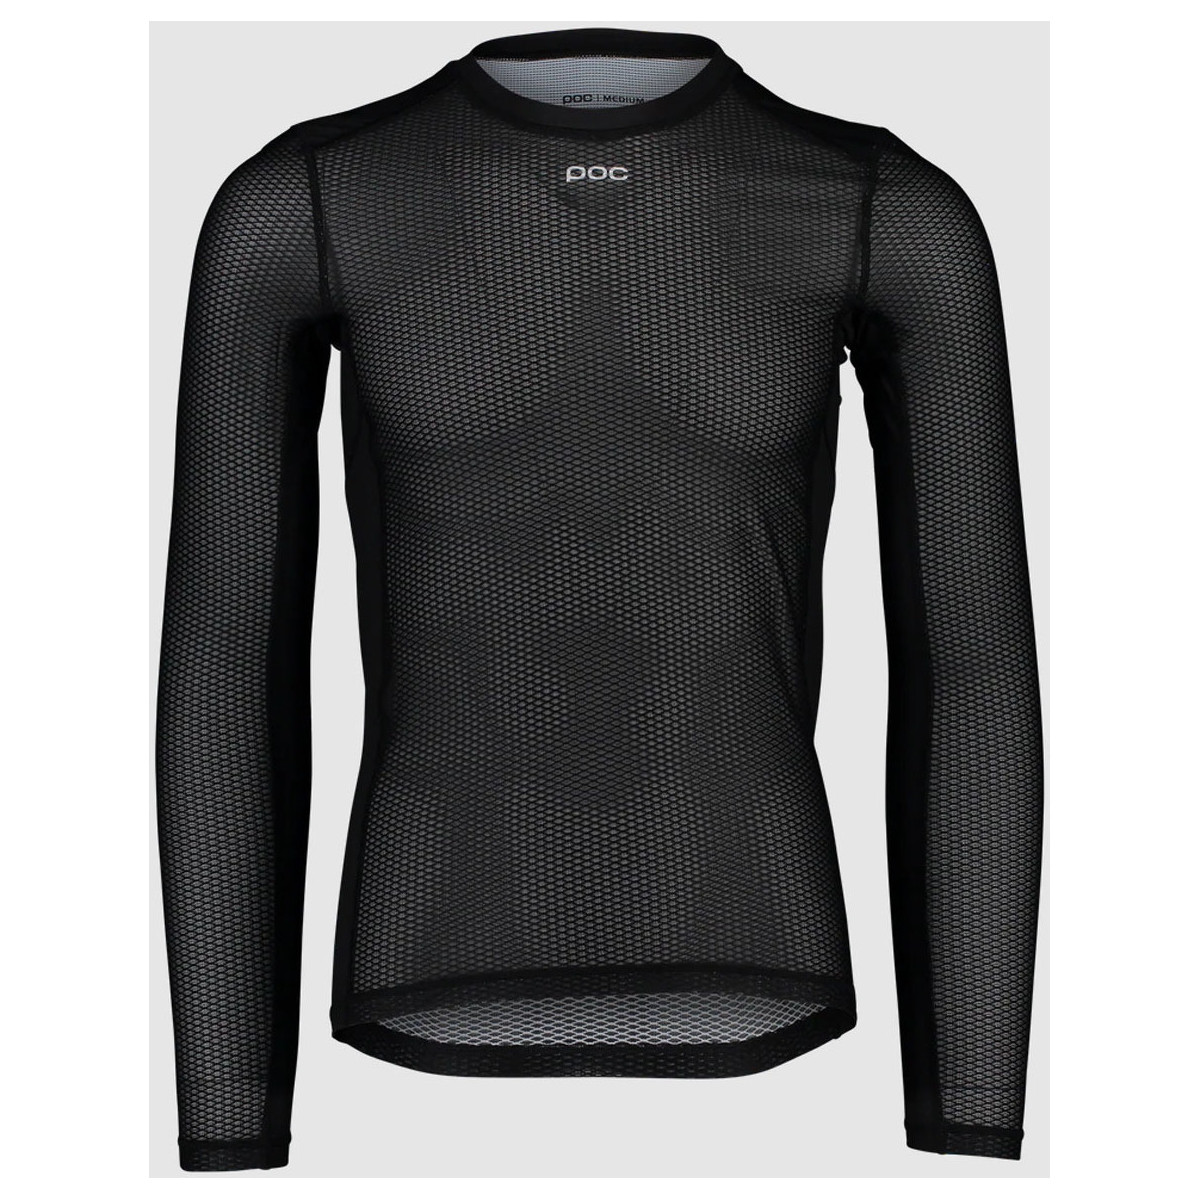 Îmbracaminte Bărbați Tricouri & Tricouri Polo Poc Essential Layer LS Jersey Uranium Black 58111-1002 Negru